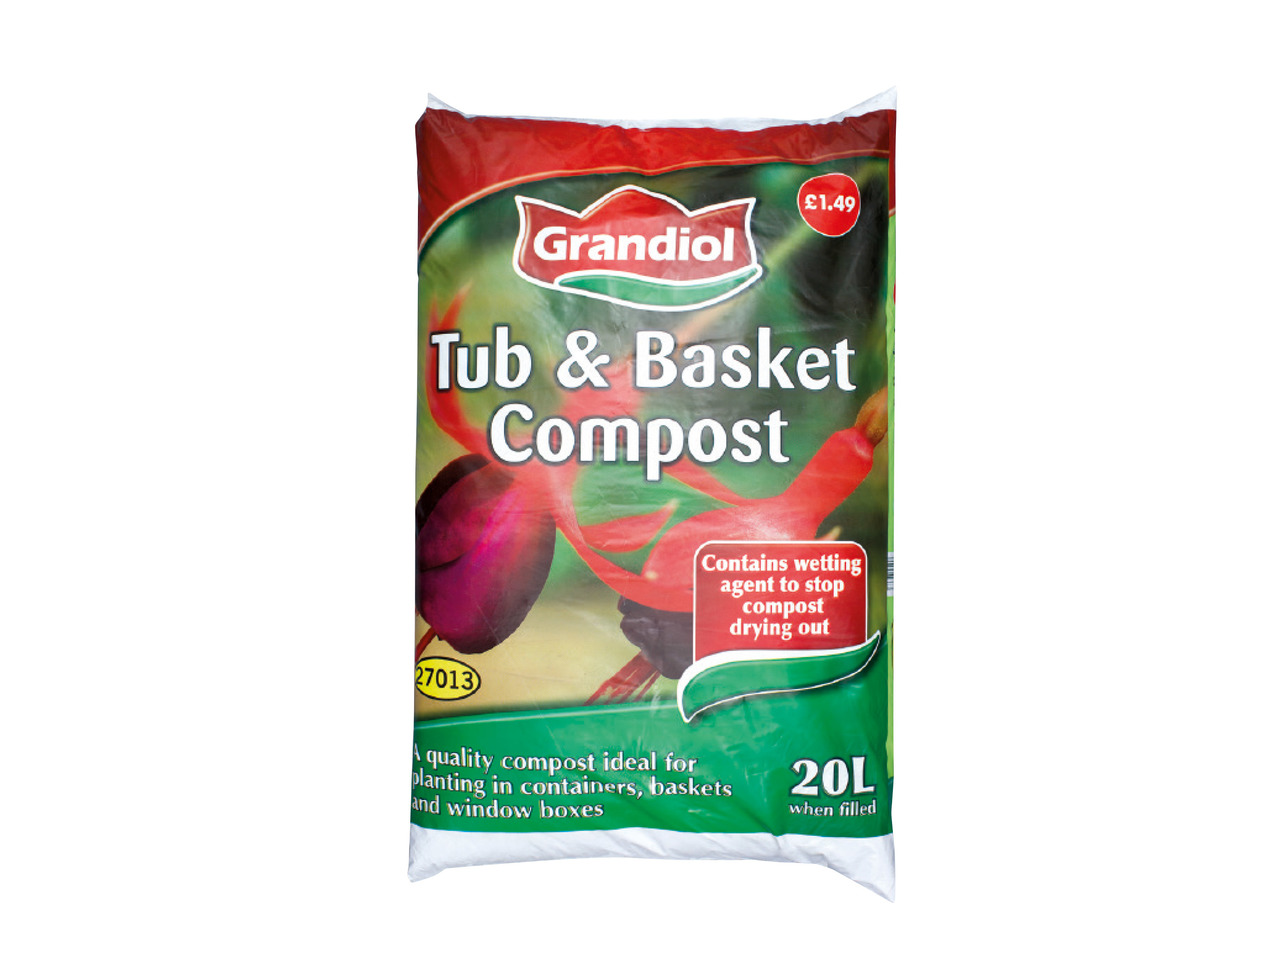 Grandiol Tub & Basket Compost1